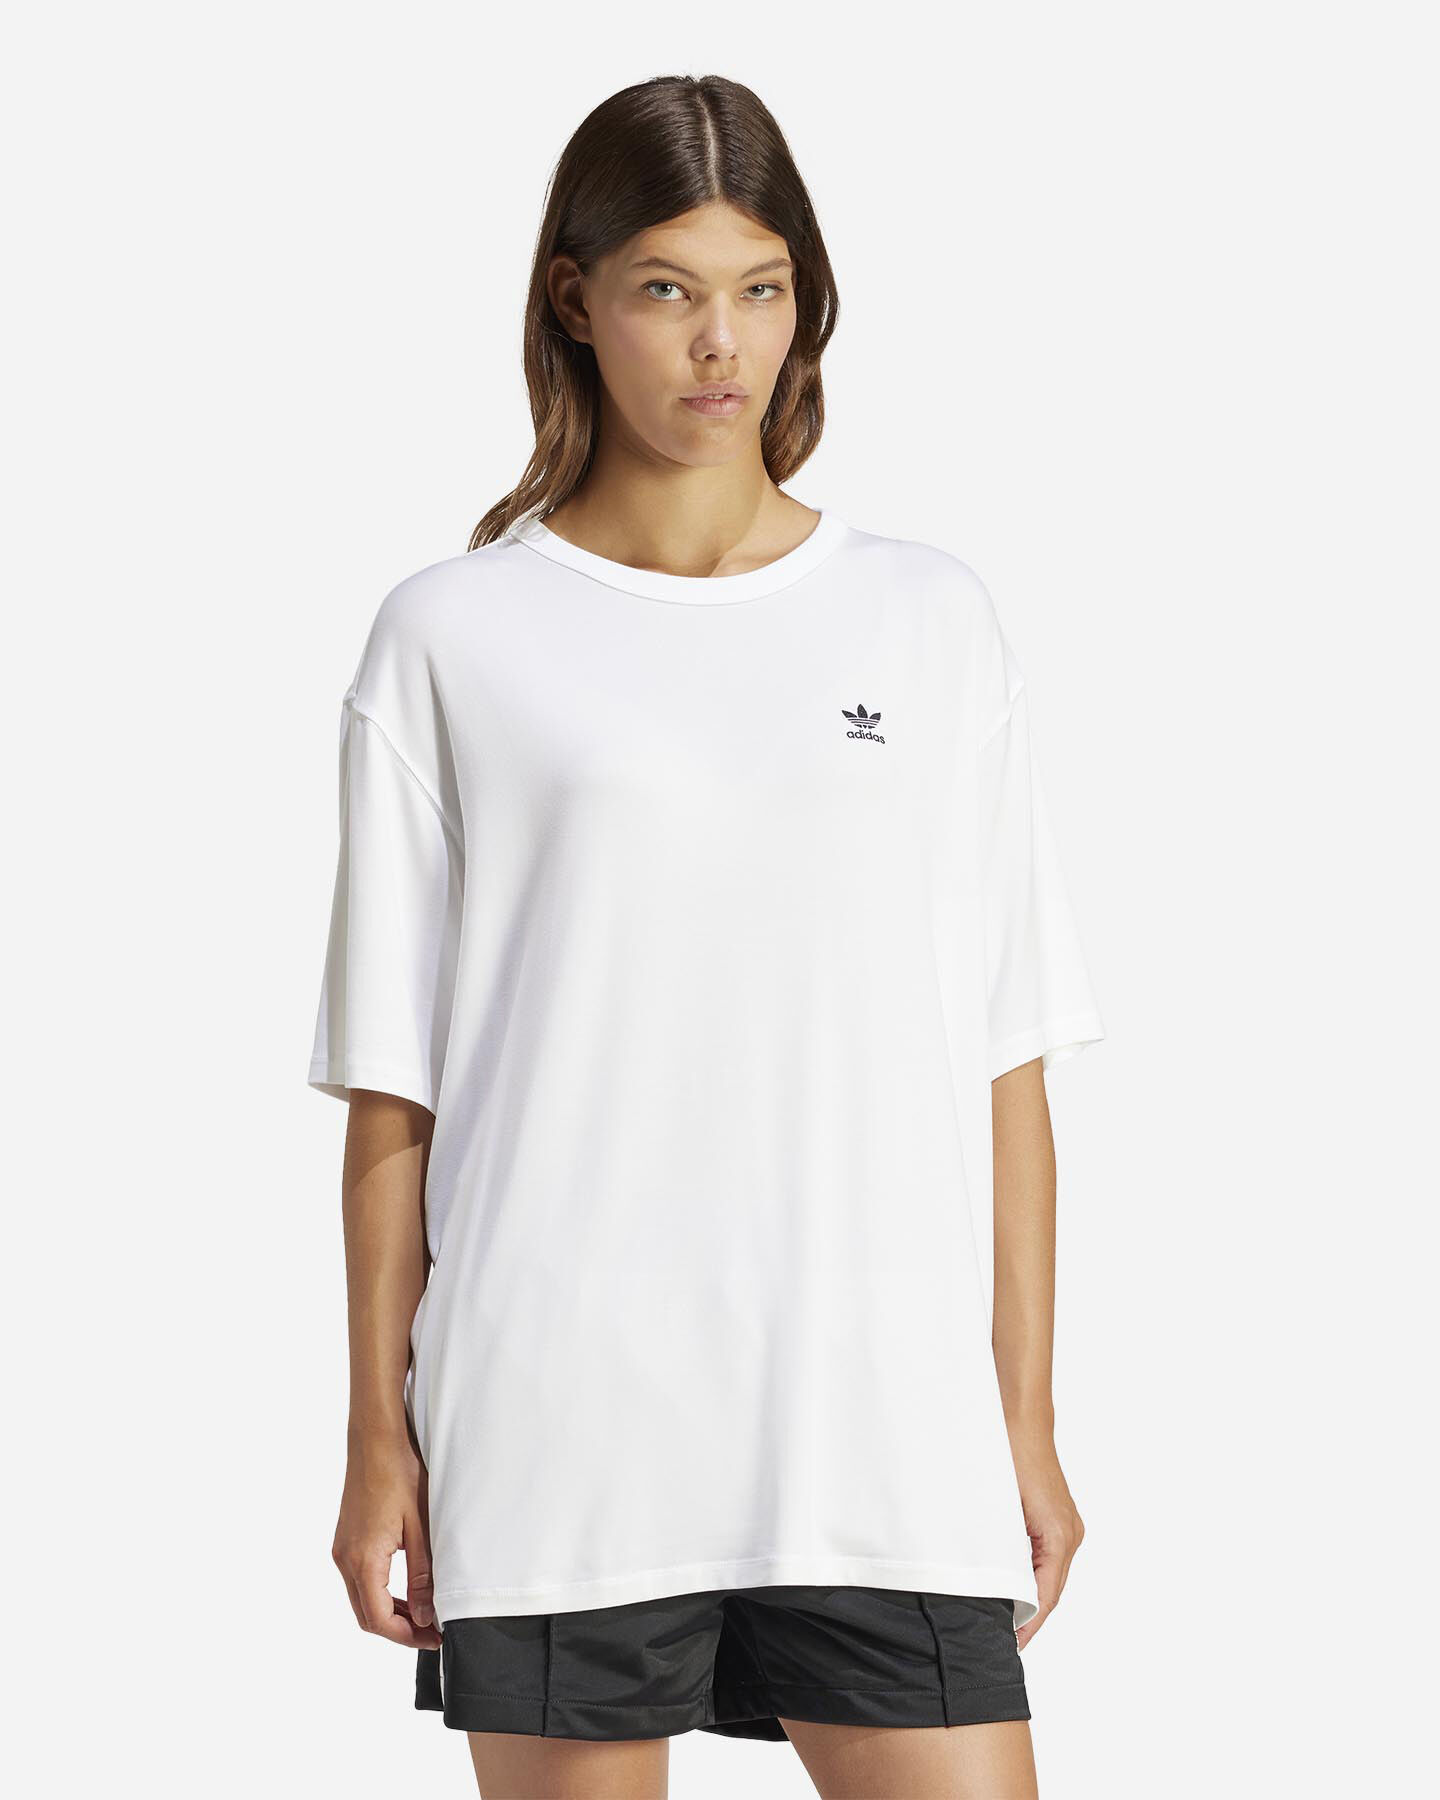  T-Shirt ADIDAS ORIGINAL TREFOIL W S5655593|UNI|XS scatto 1